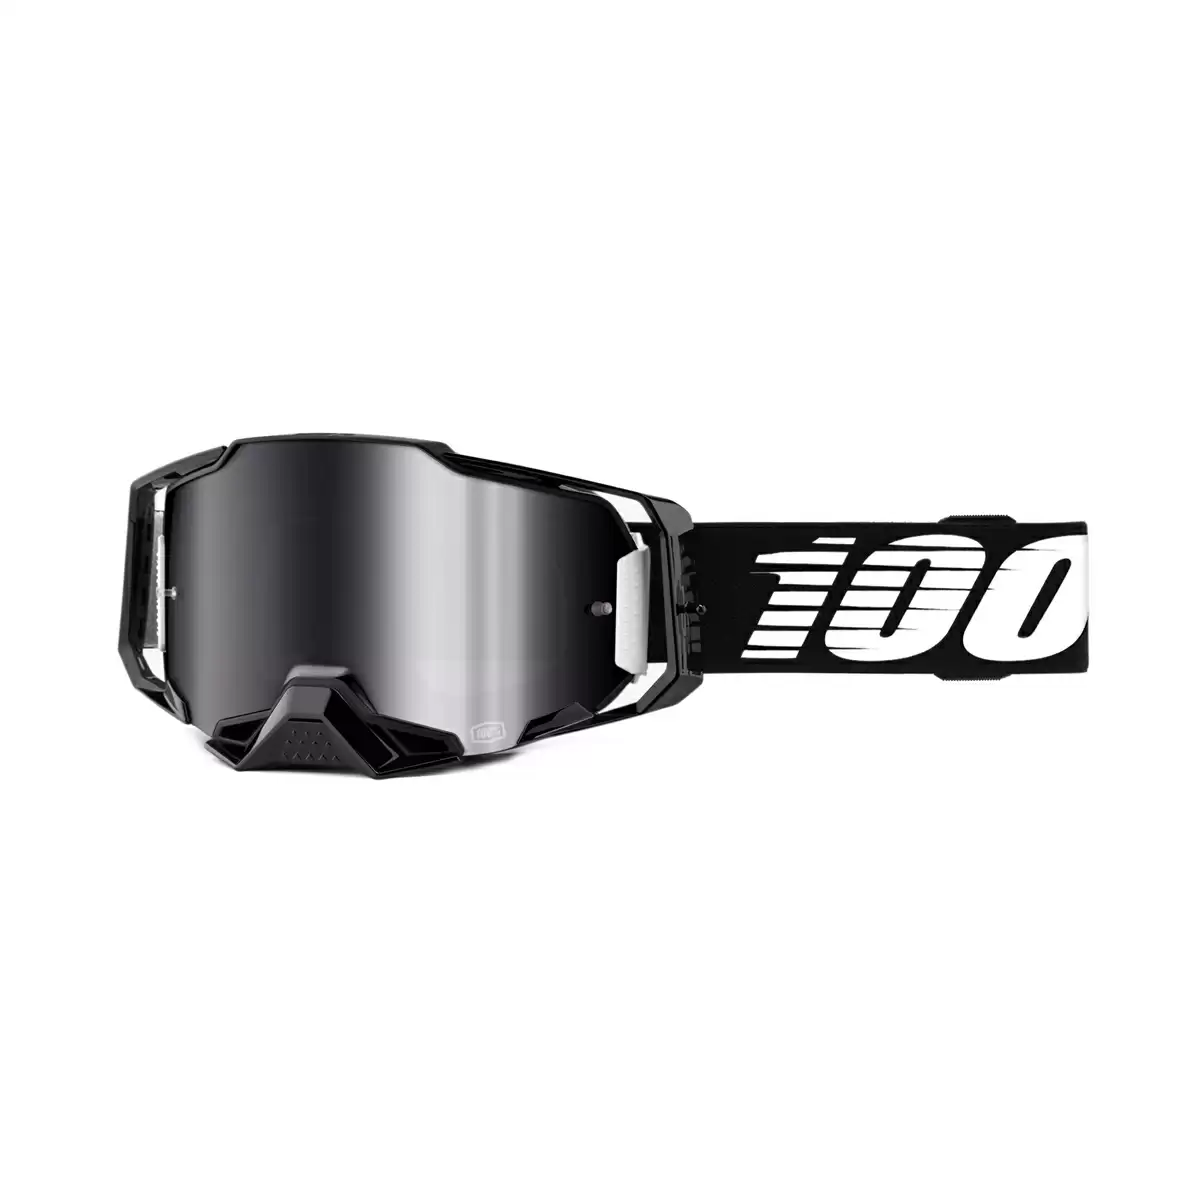 Armega Goggle Black Silver Flash-Spiegellinse - image